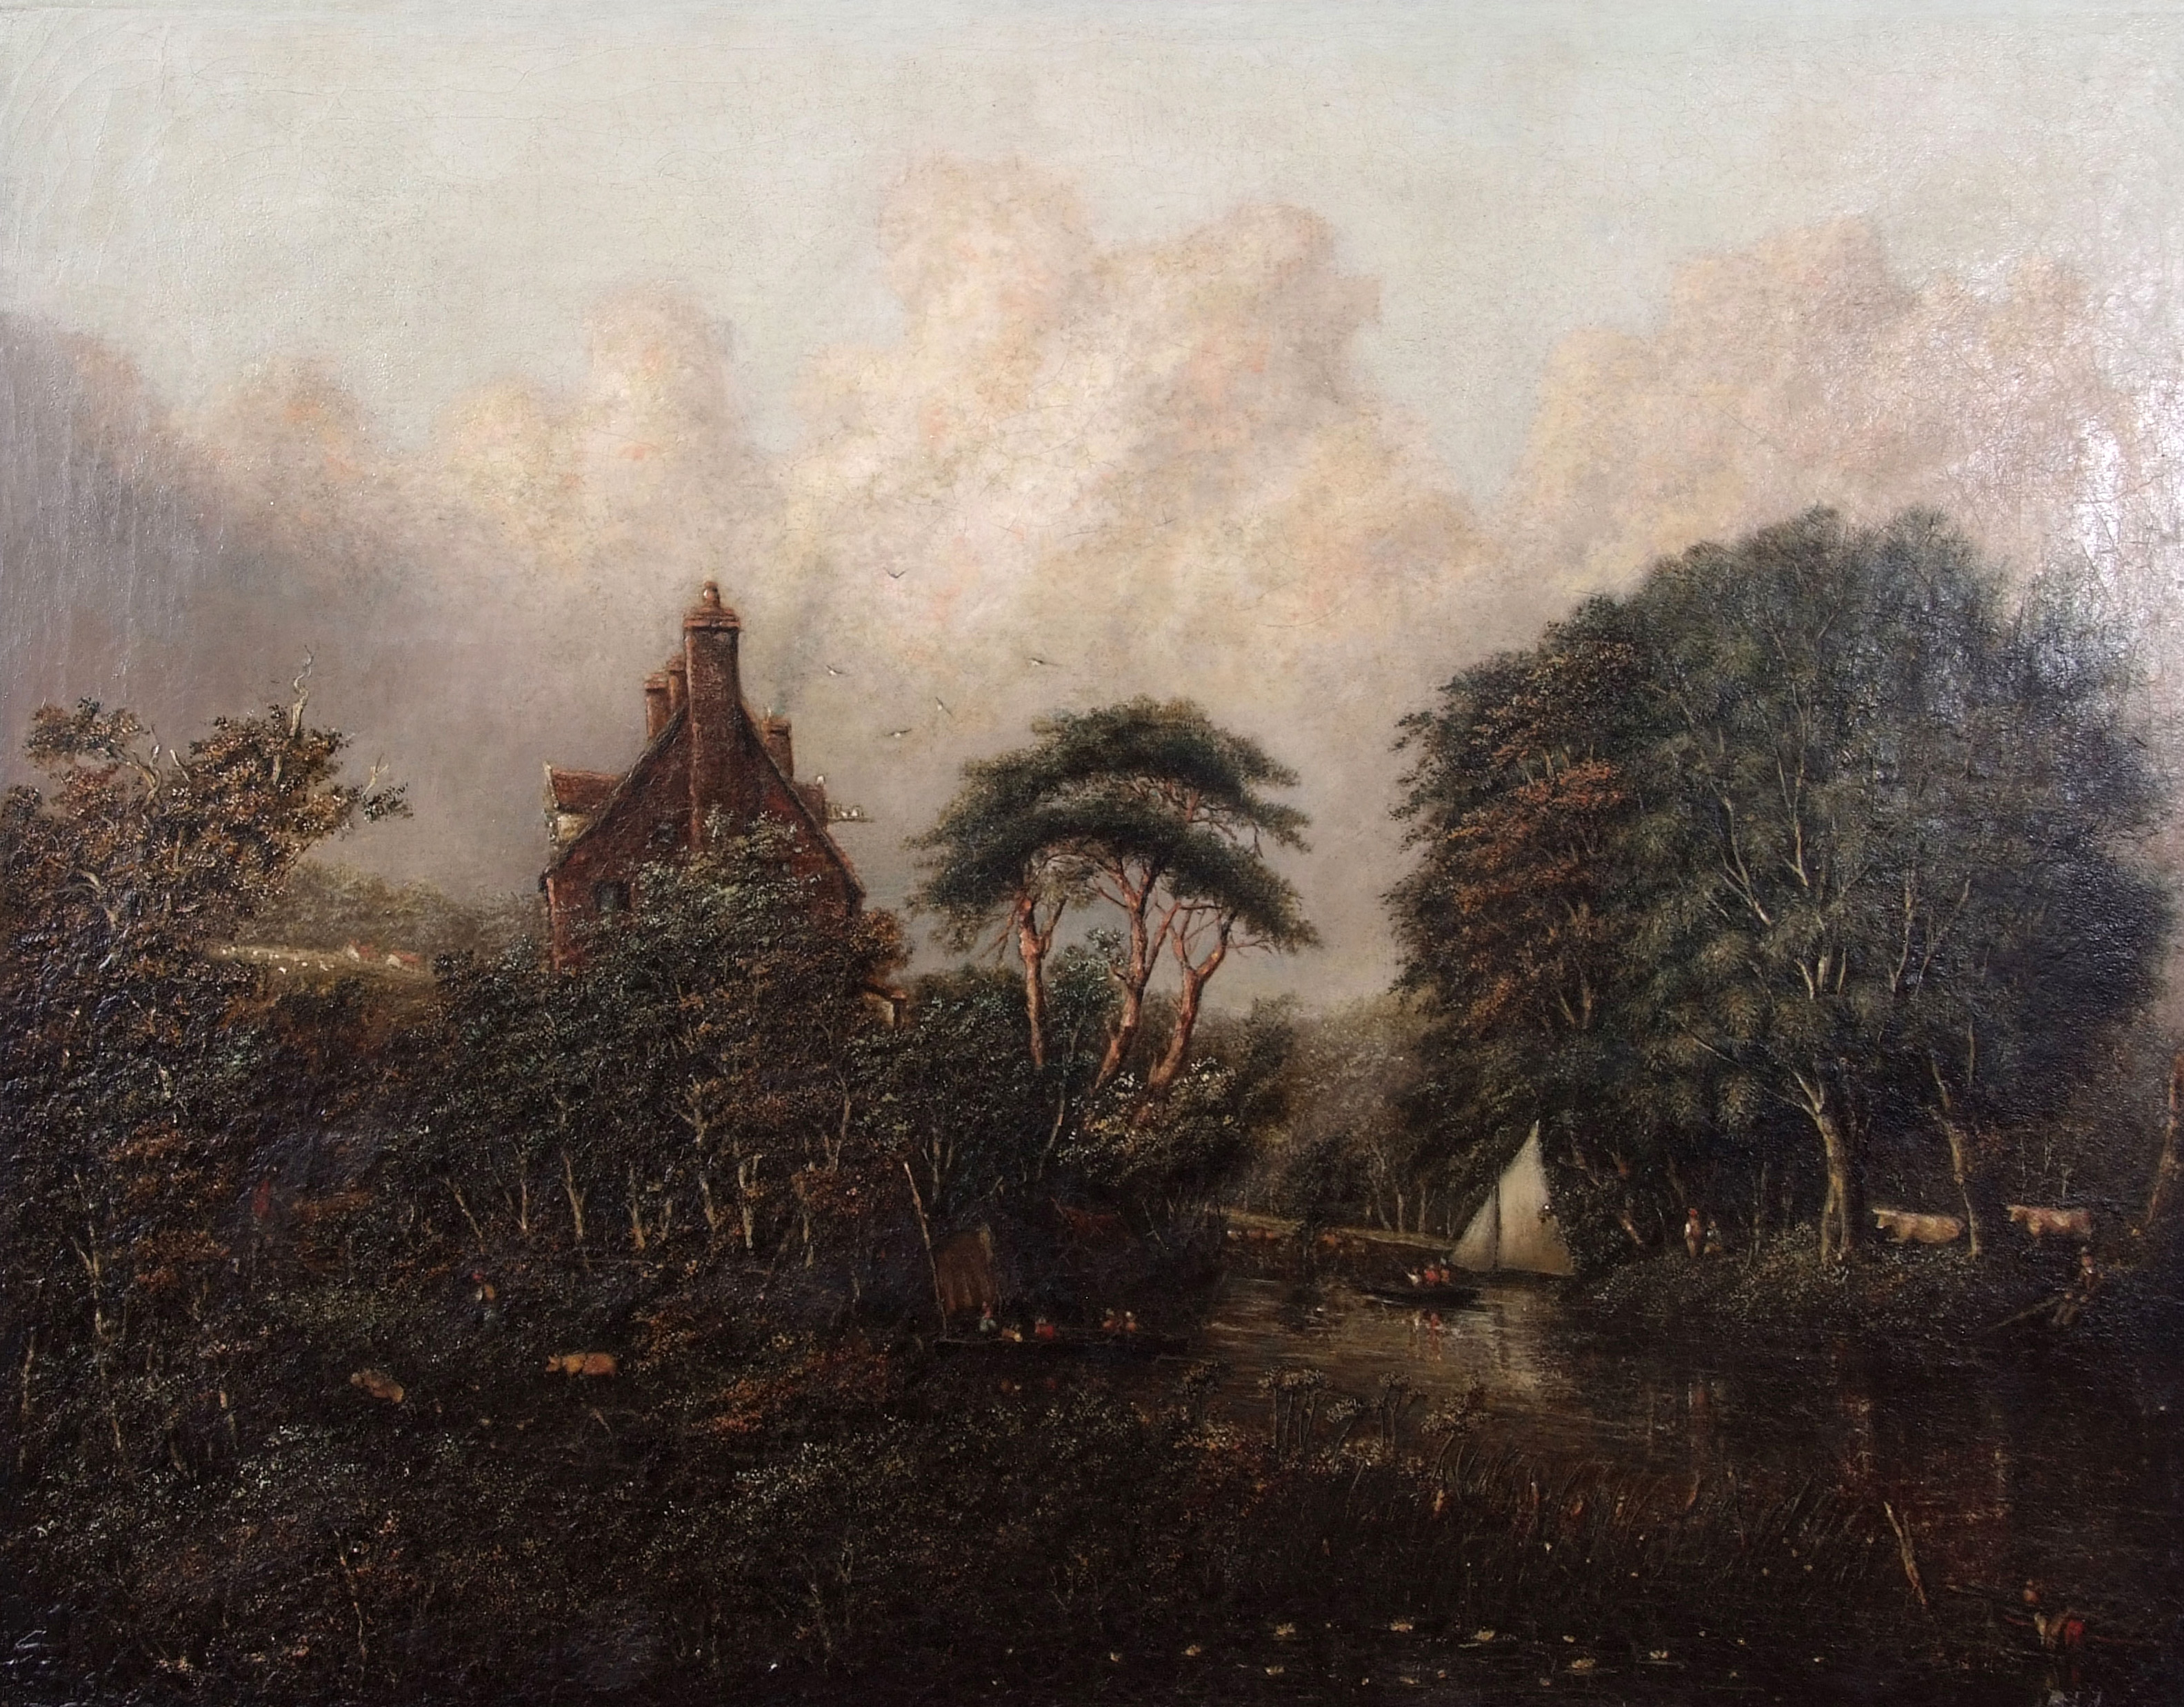 William Philip Barnes Freeman (1813-1897), "Hellesdon House, Norwich" oil on canvas, 60 x 77cm,